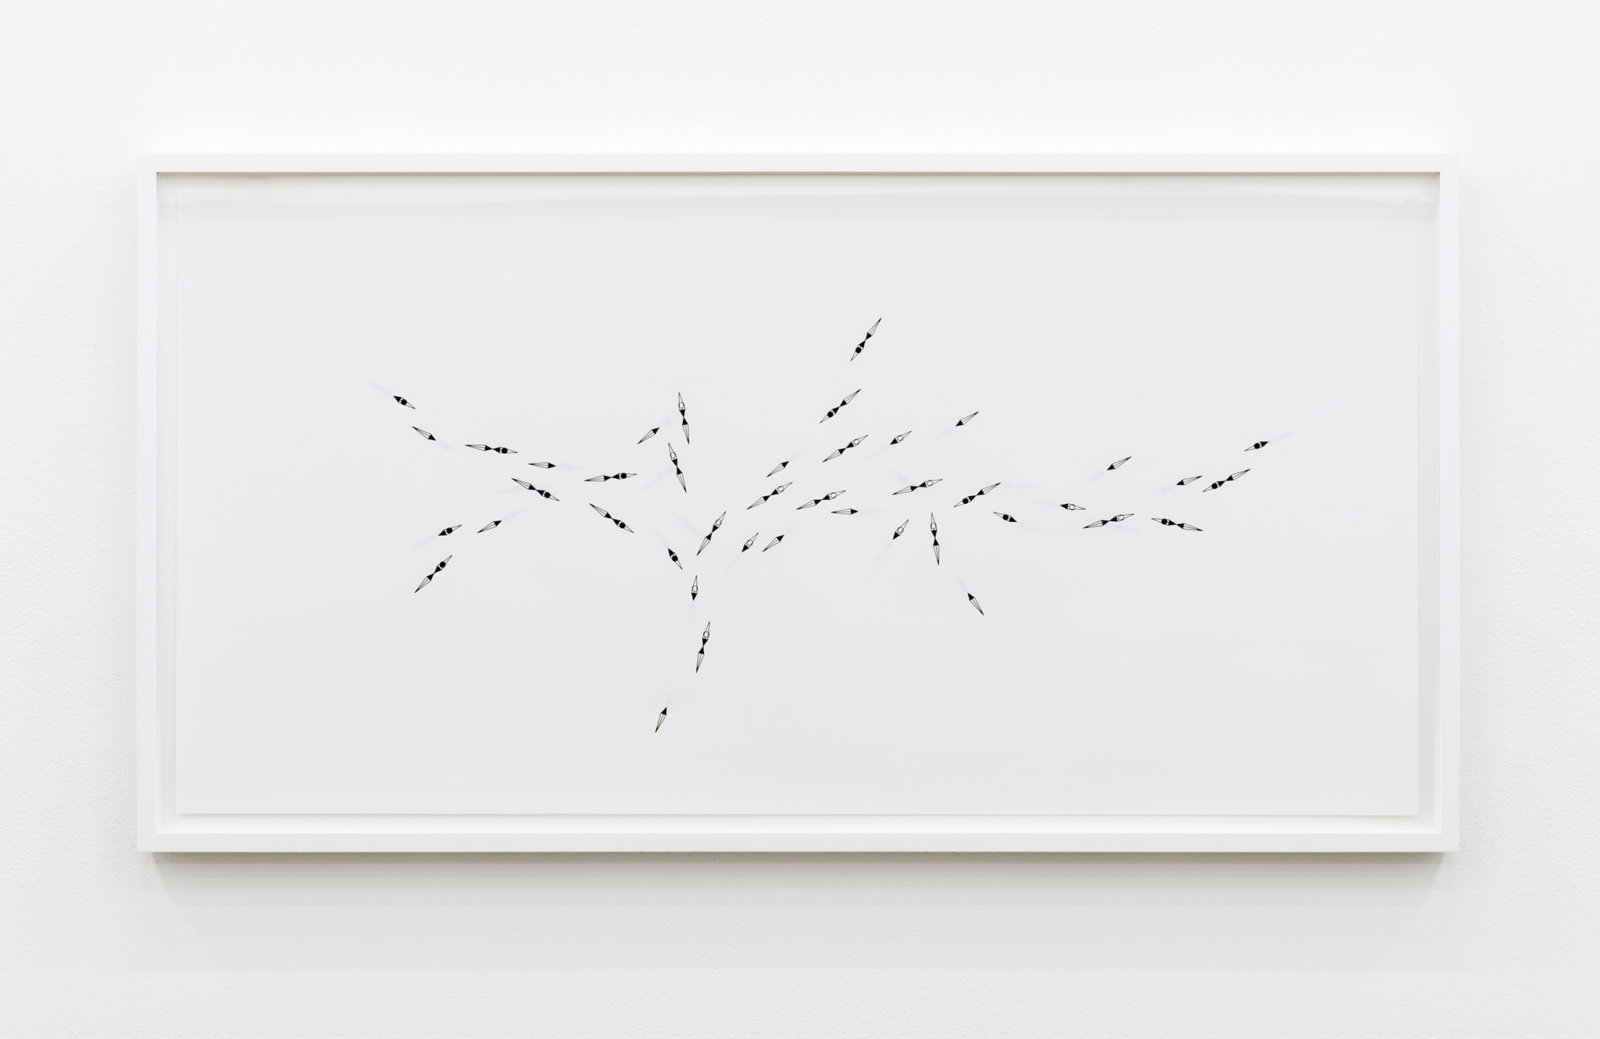 Janice Kerbel, Sync (River), 2017, double sided silkscreen print on paper, 33 x 17 in. (84 x 42 cm)